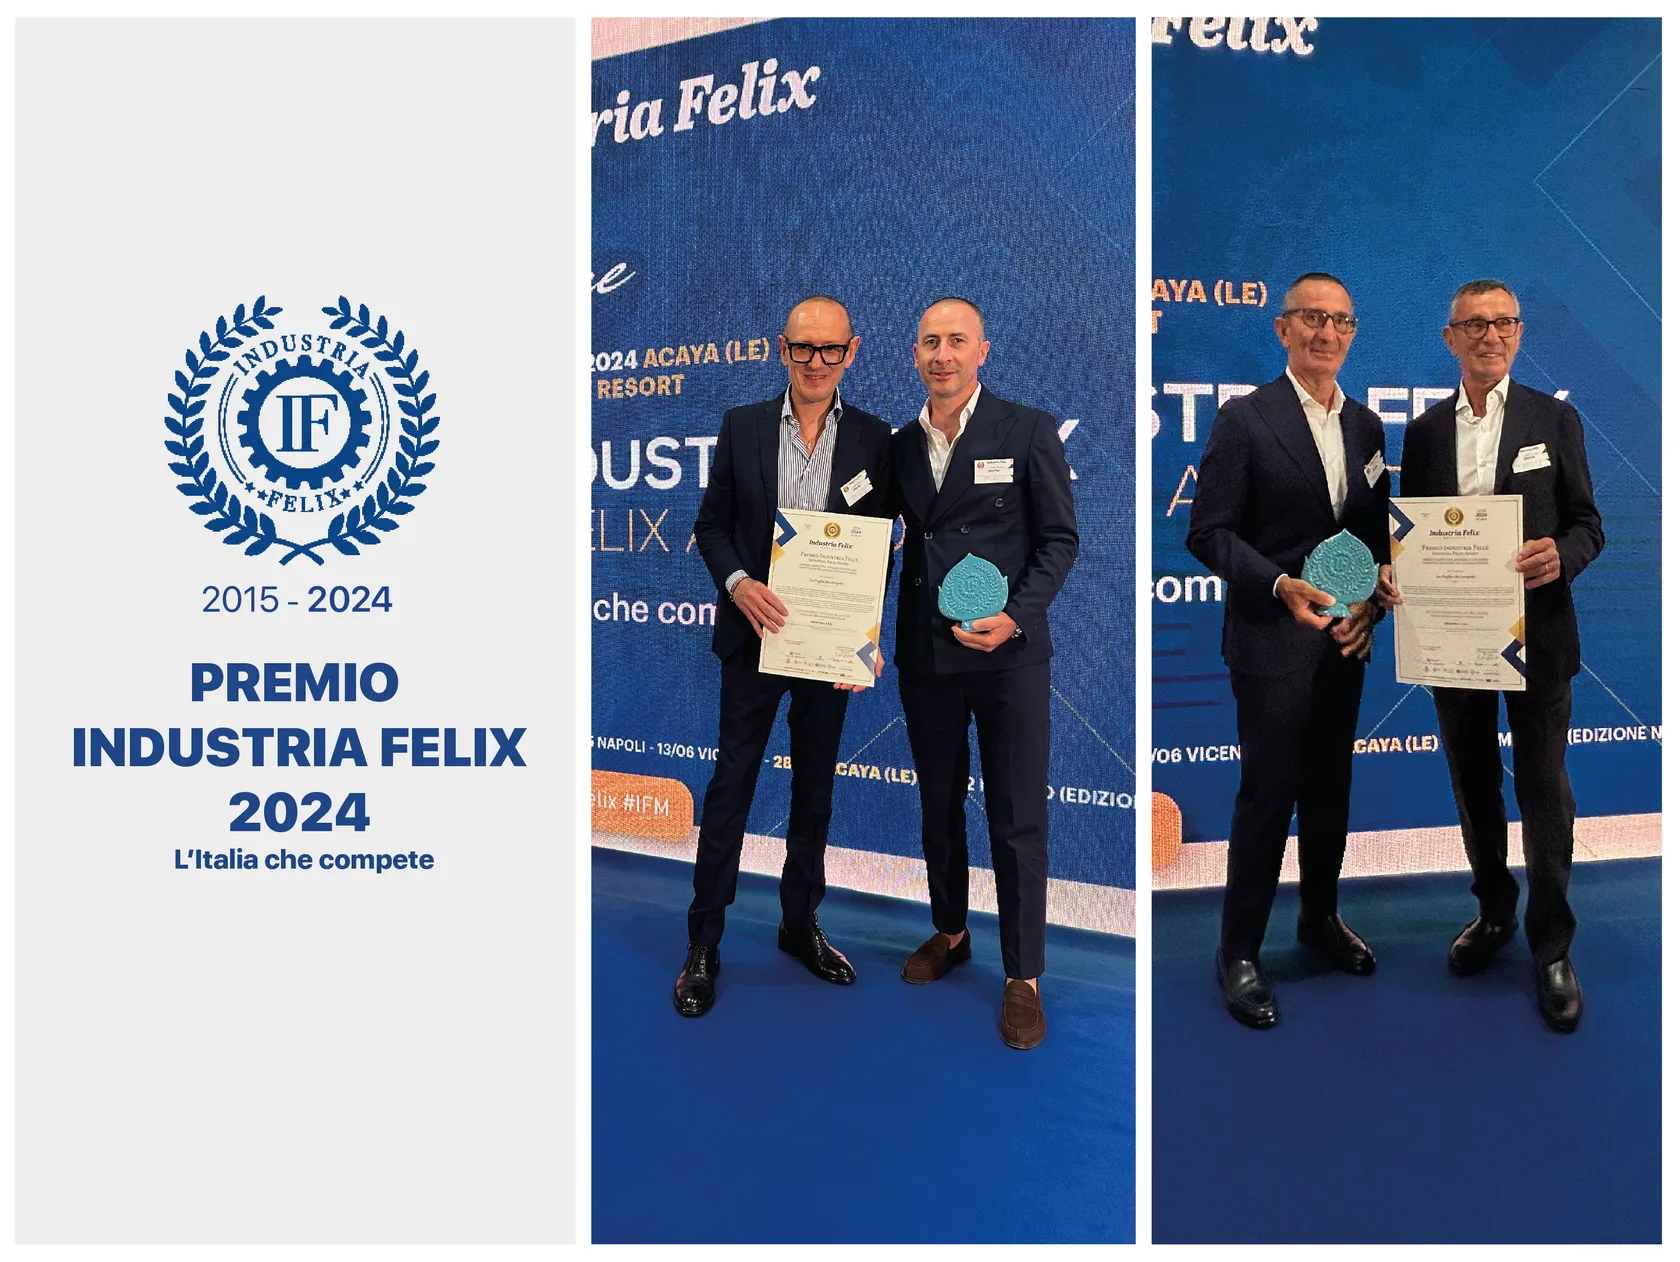 Ermetika awarded the Industria Felix Prize 2024